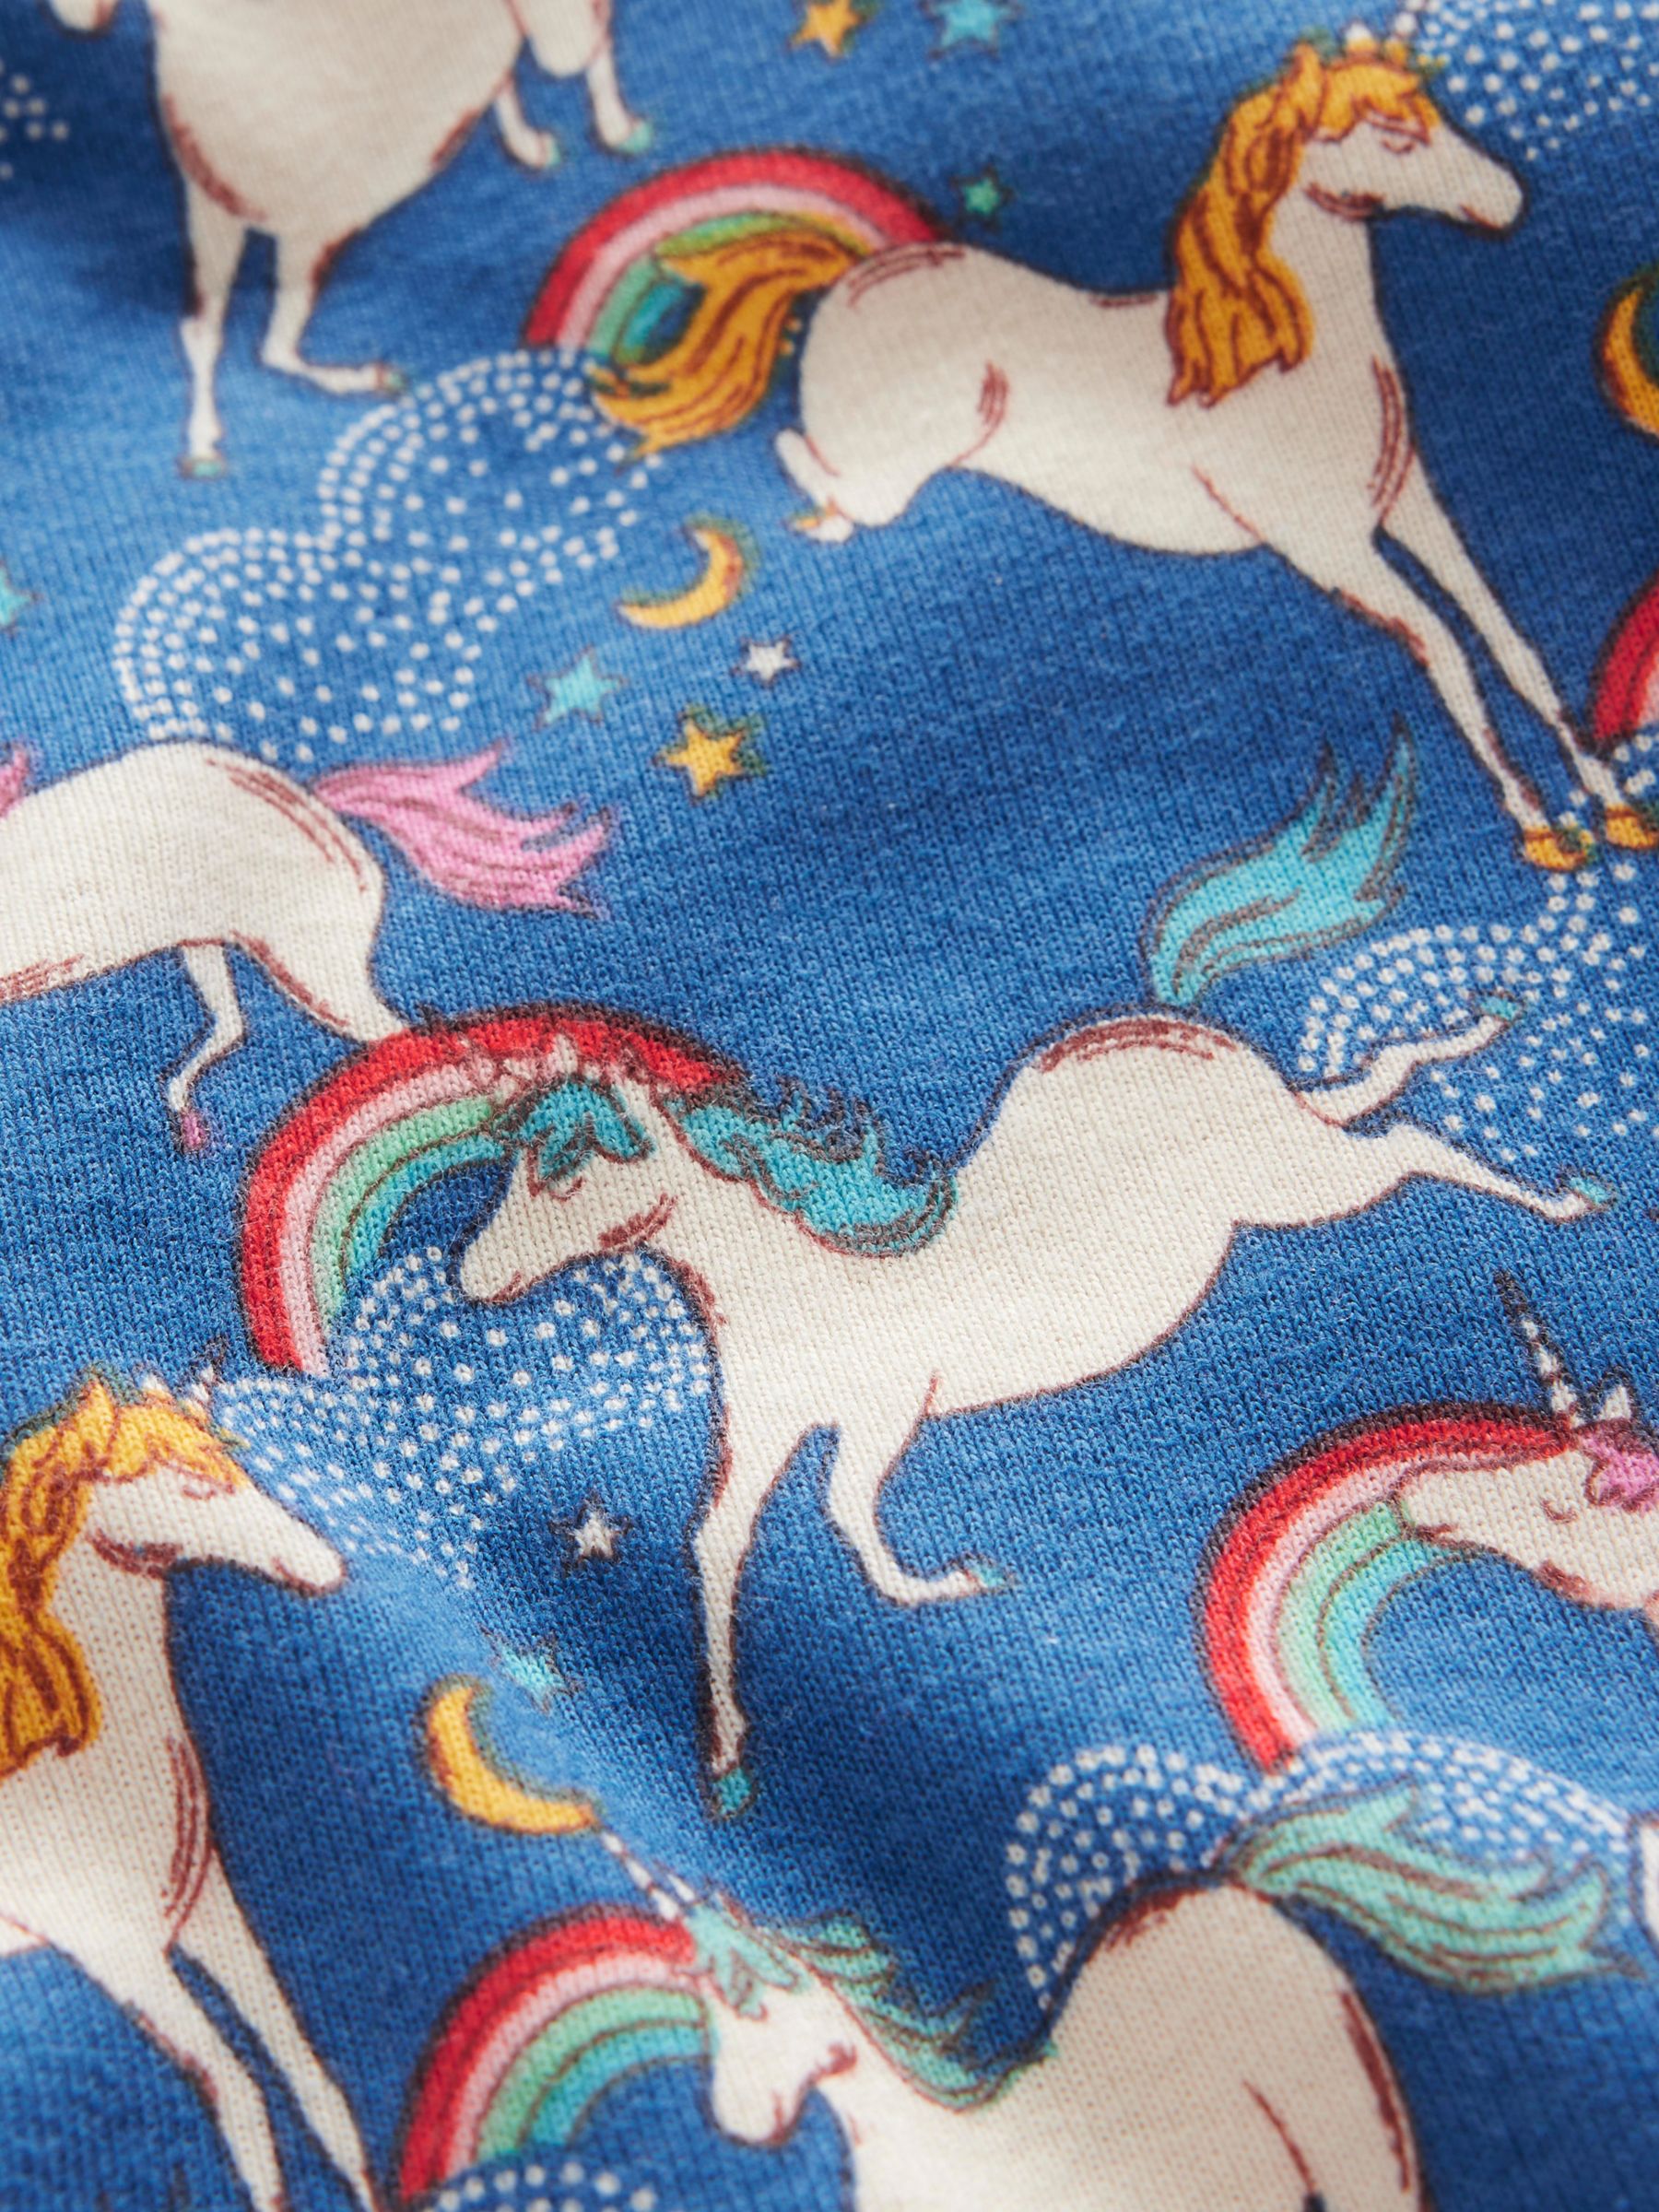 Mini Boden Kids' Unicorn Print Snug Short John Pyjamas, Blue Rainbow, 11 years